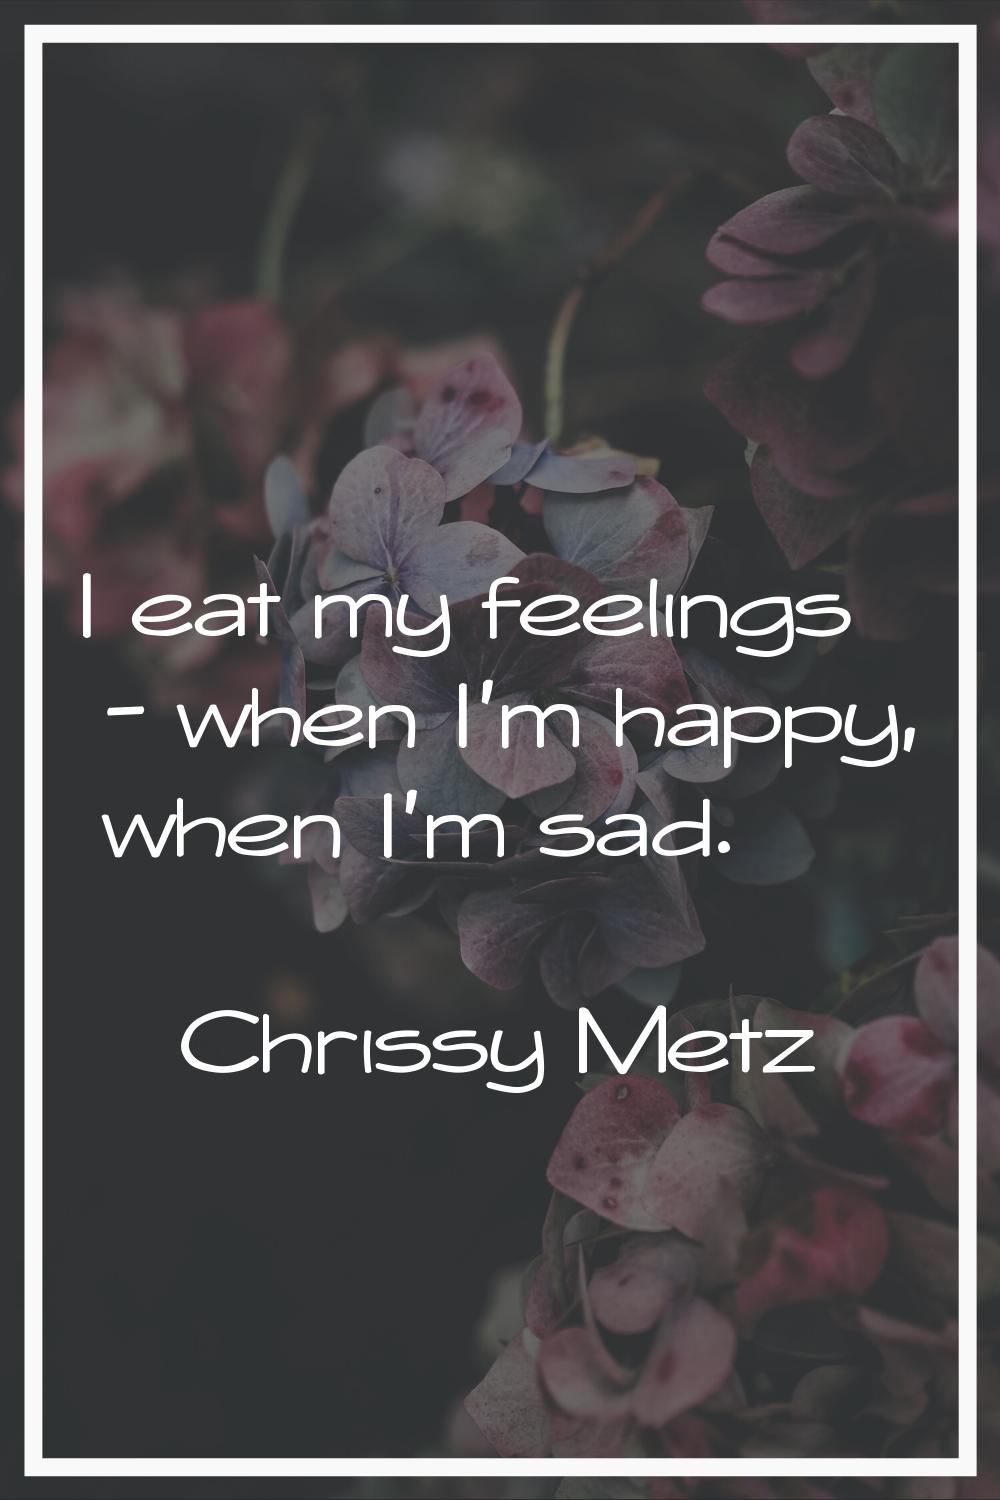 I eat my feelings - when I'm happy, when I'm sad.